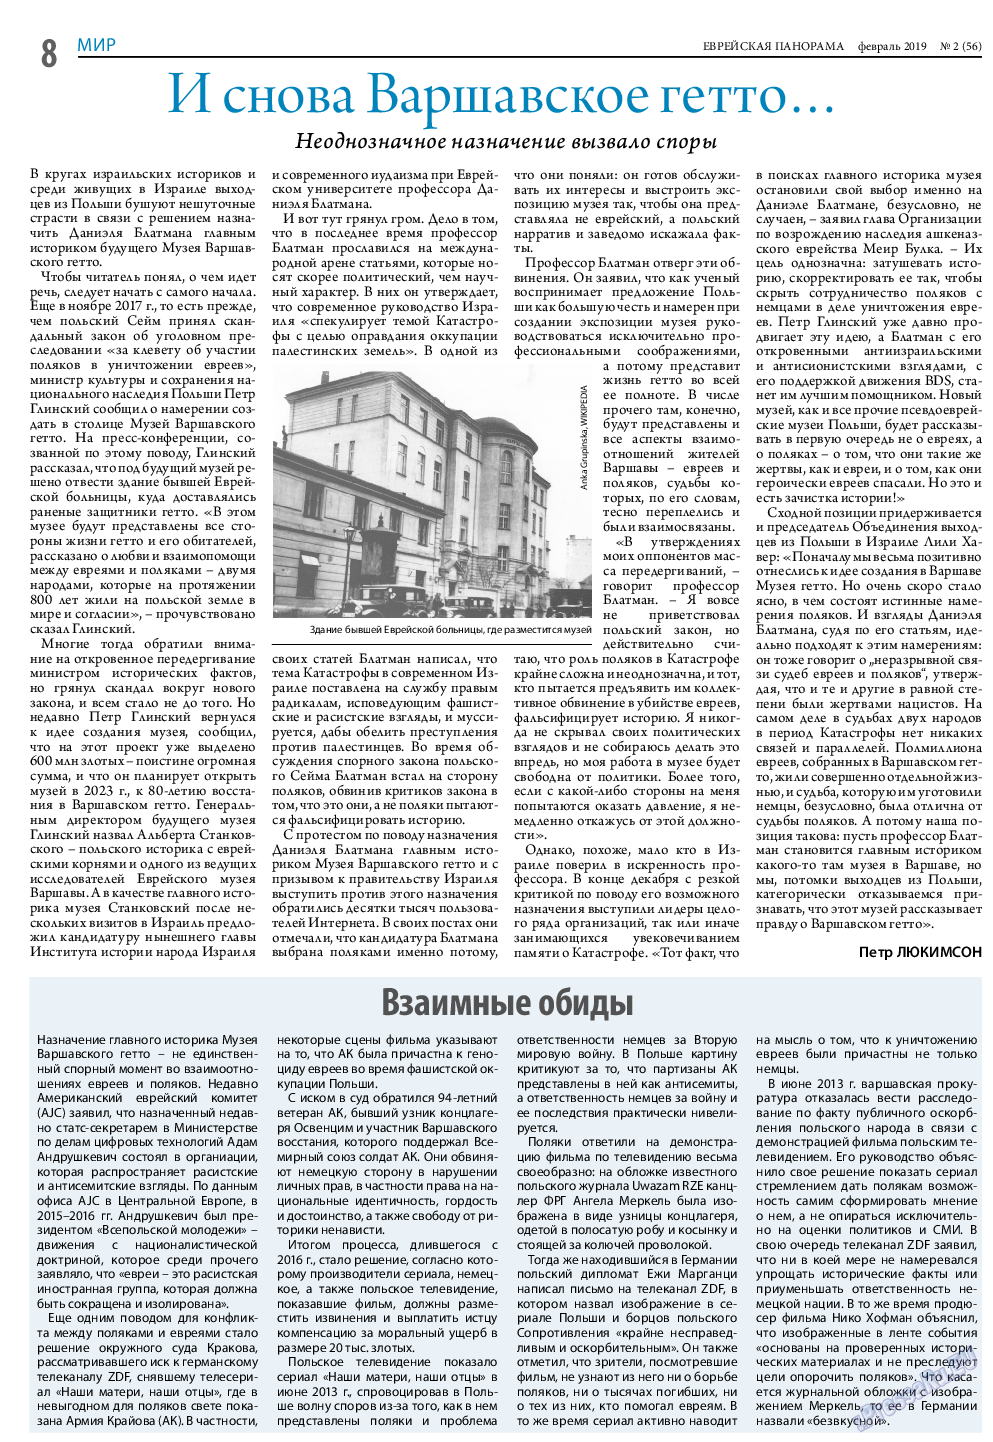 Еврейская панорама, газета. 2019 №2 стр.8